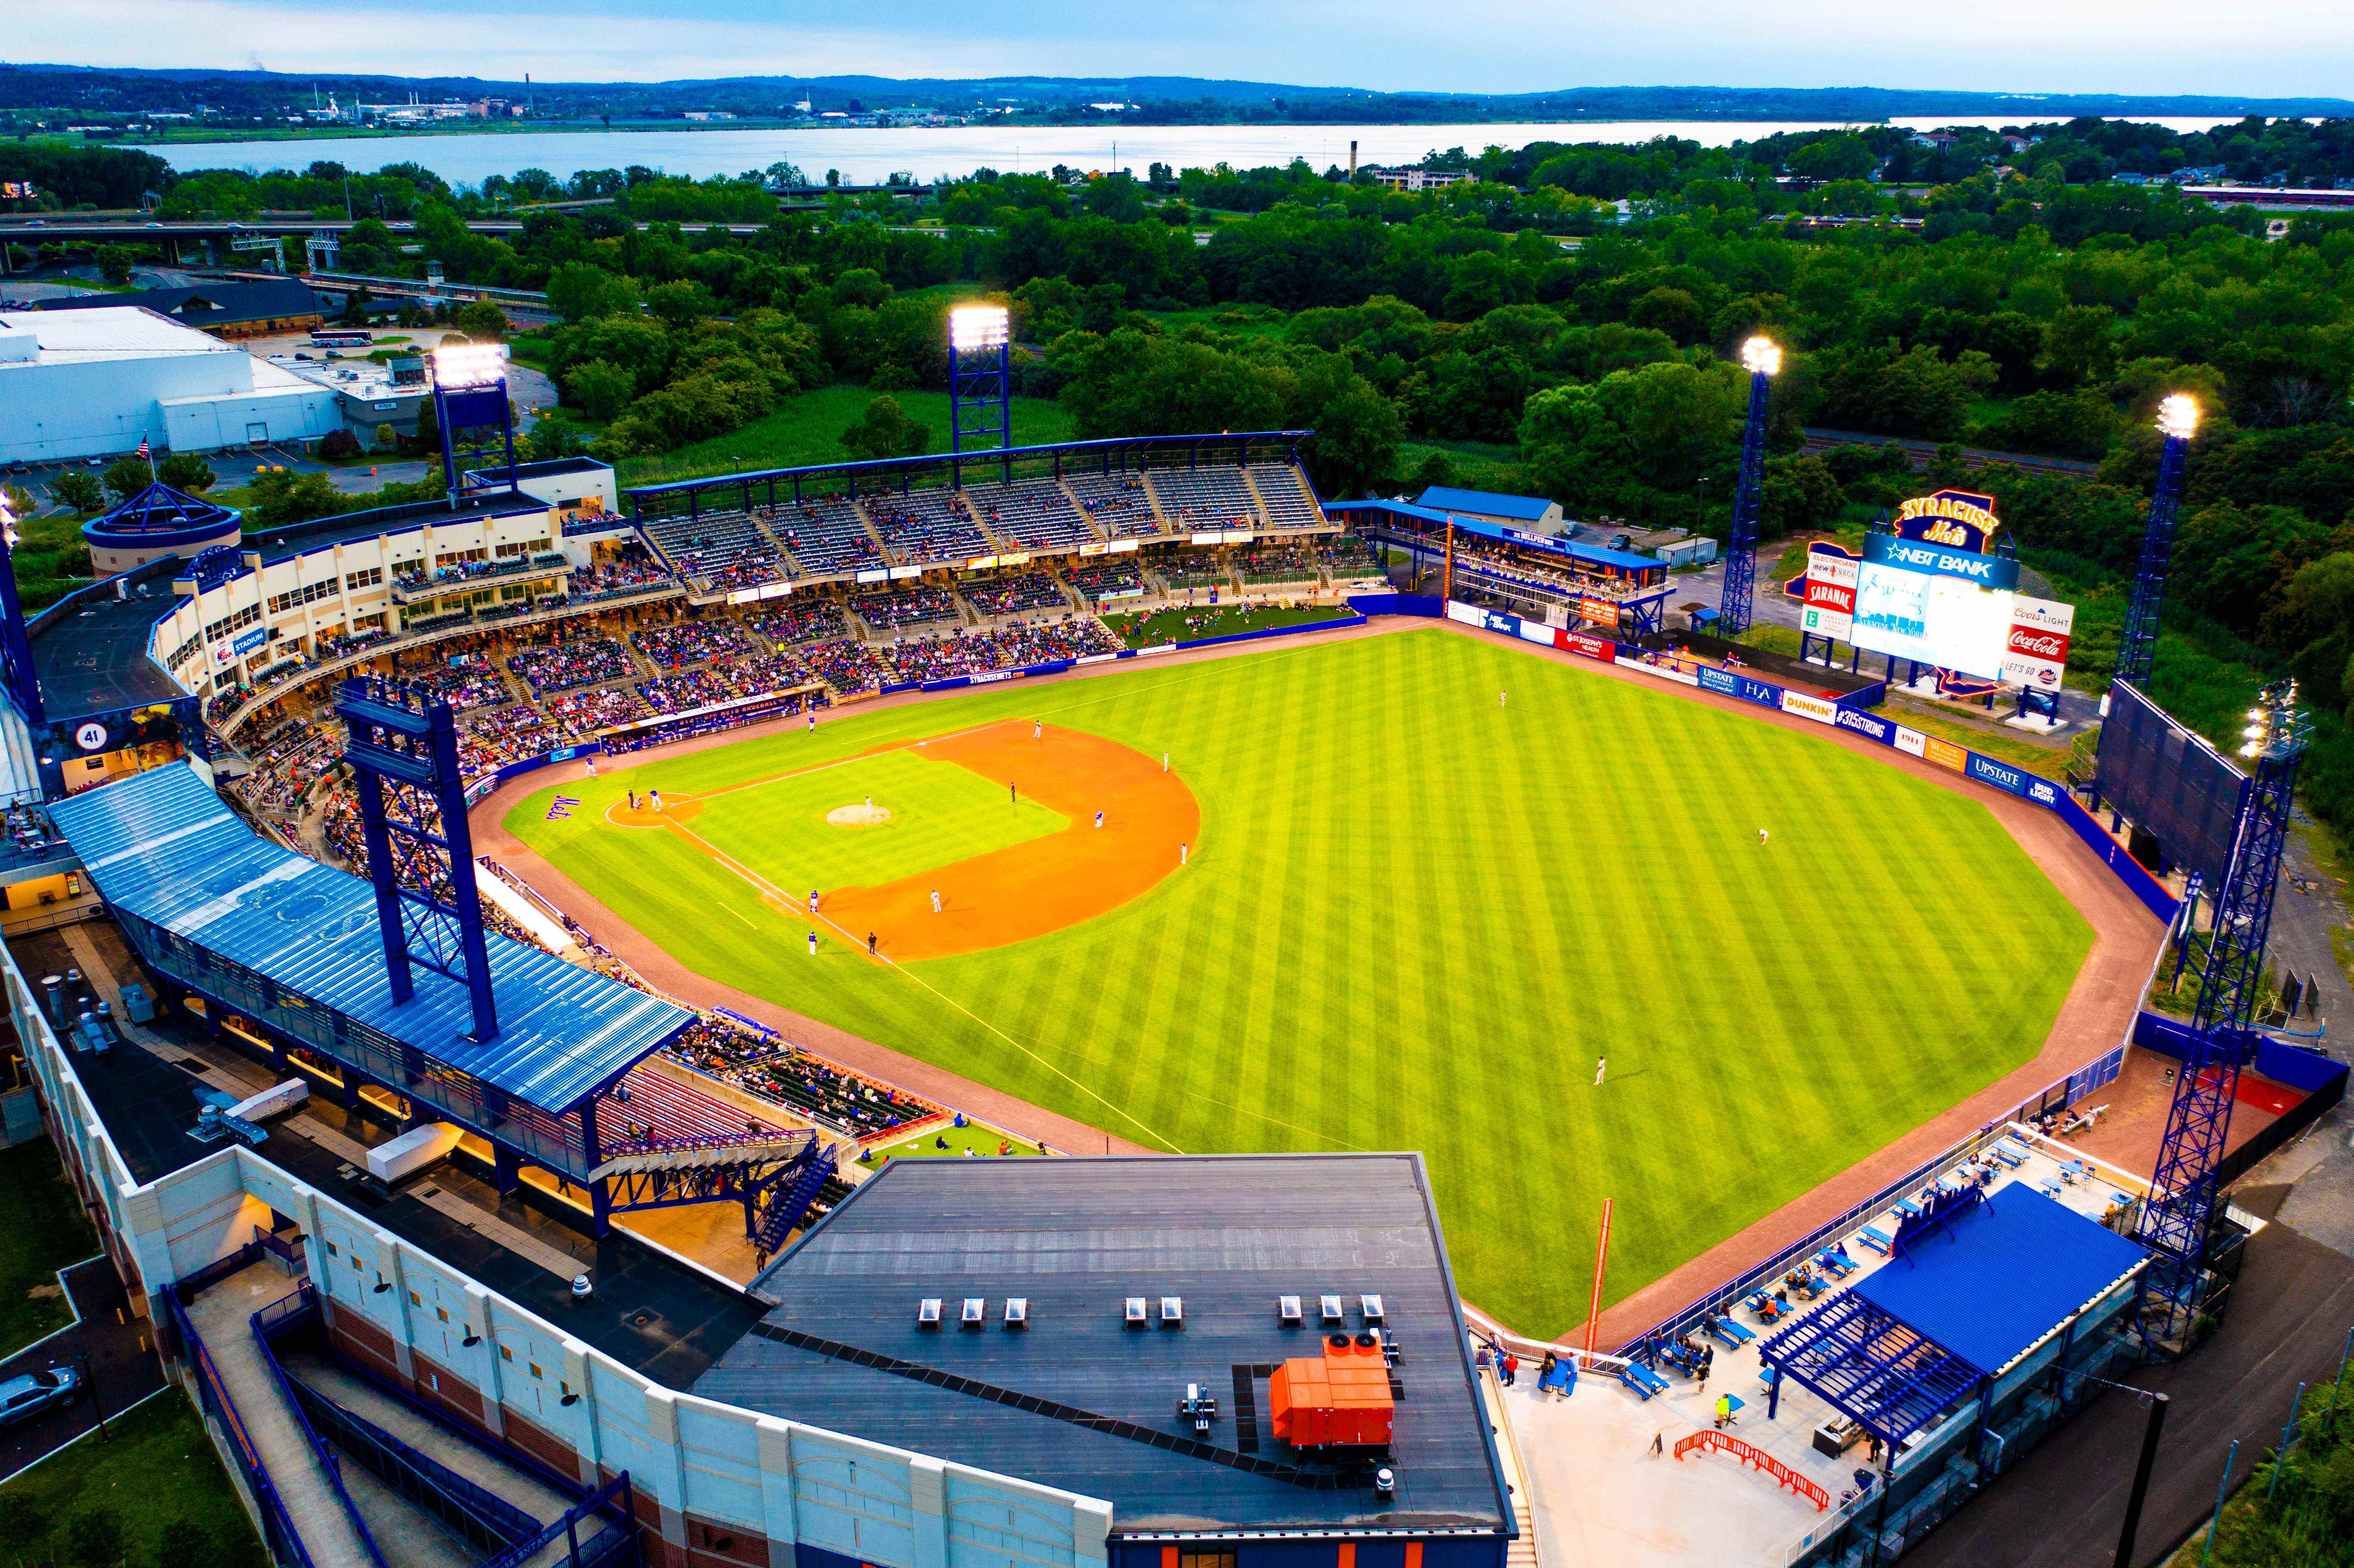 MILB Syracuse Mets 2023 Home Baseball Games